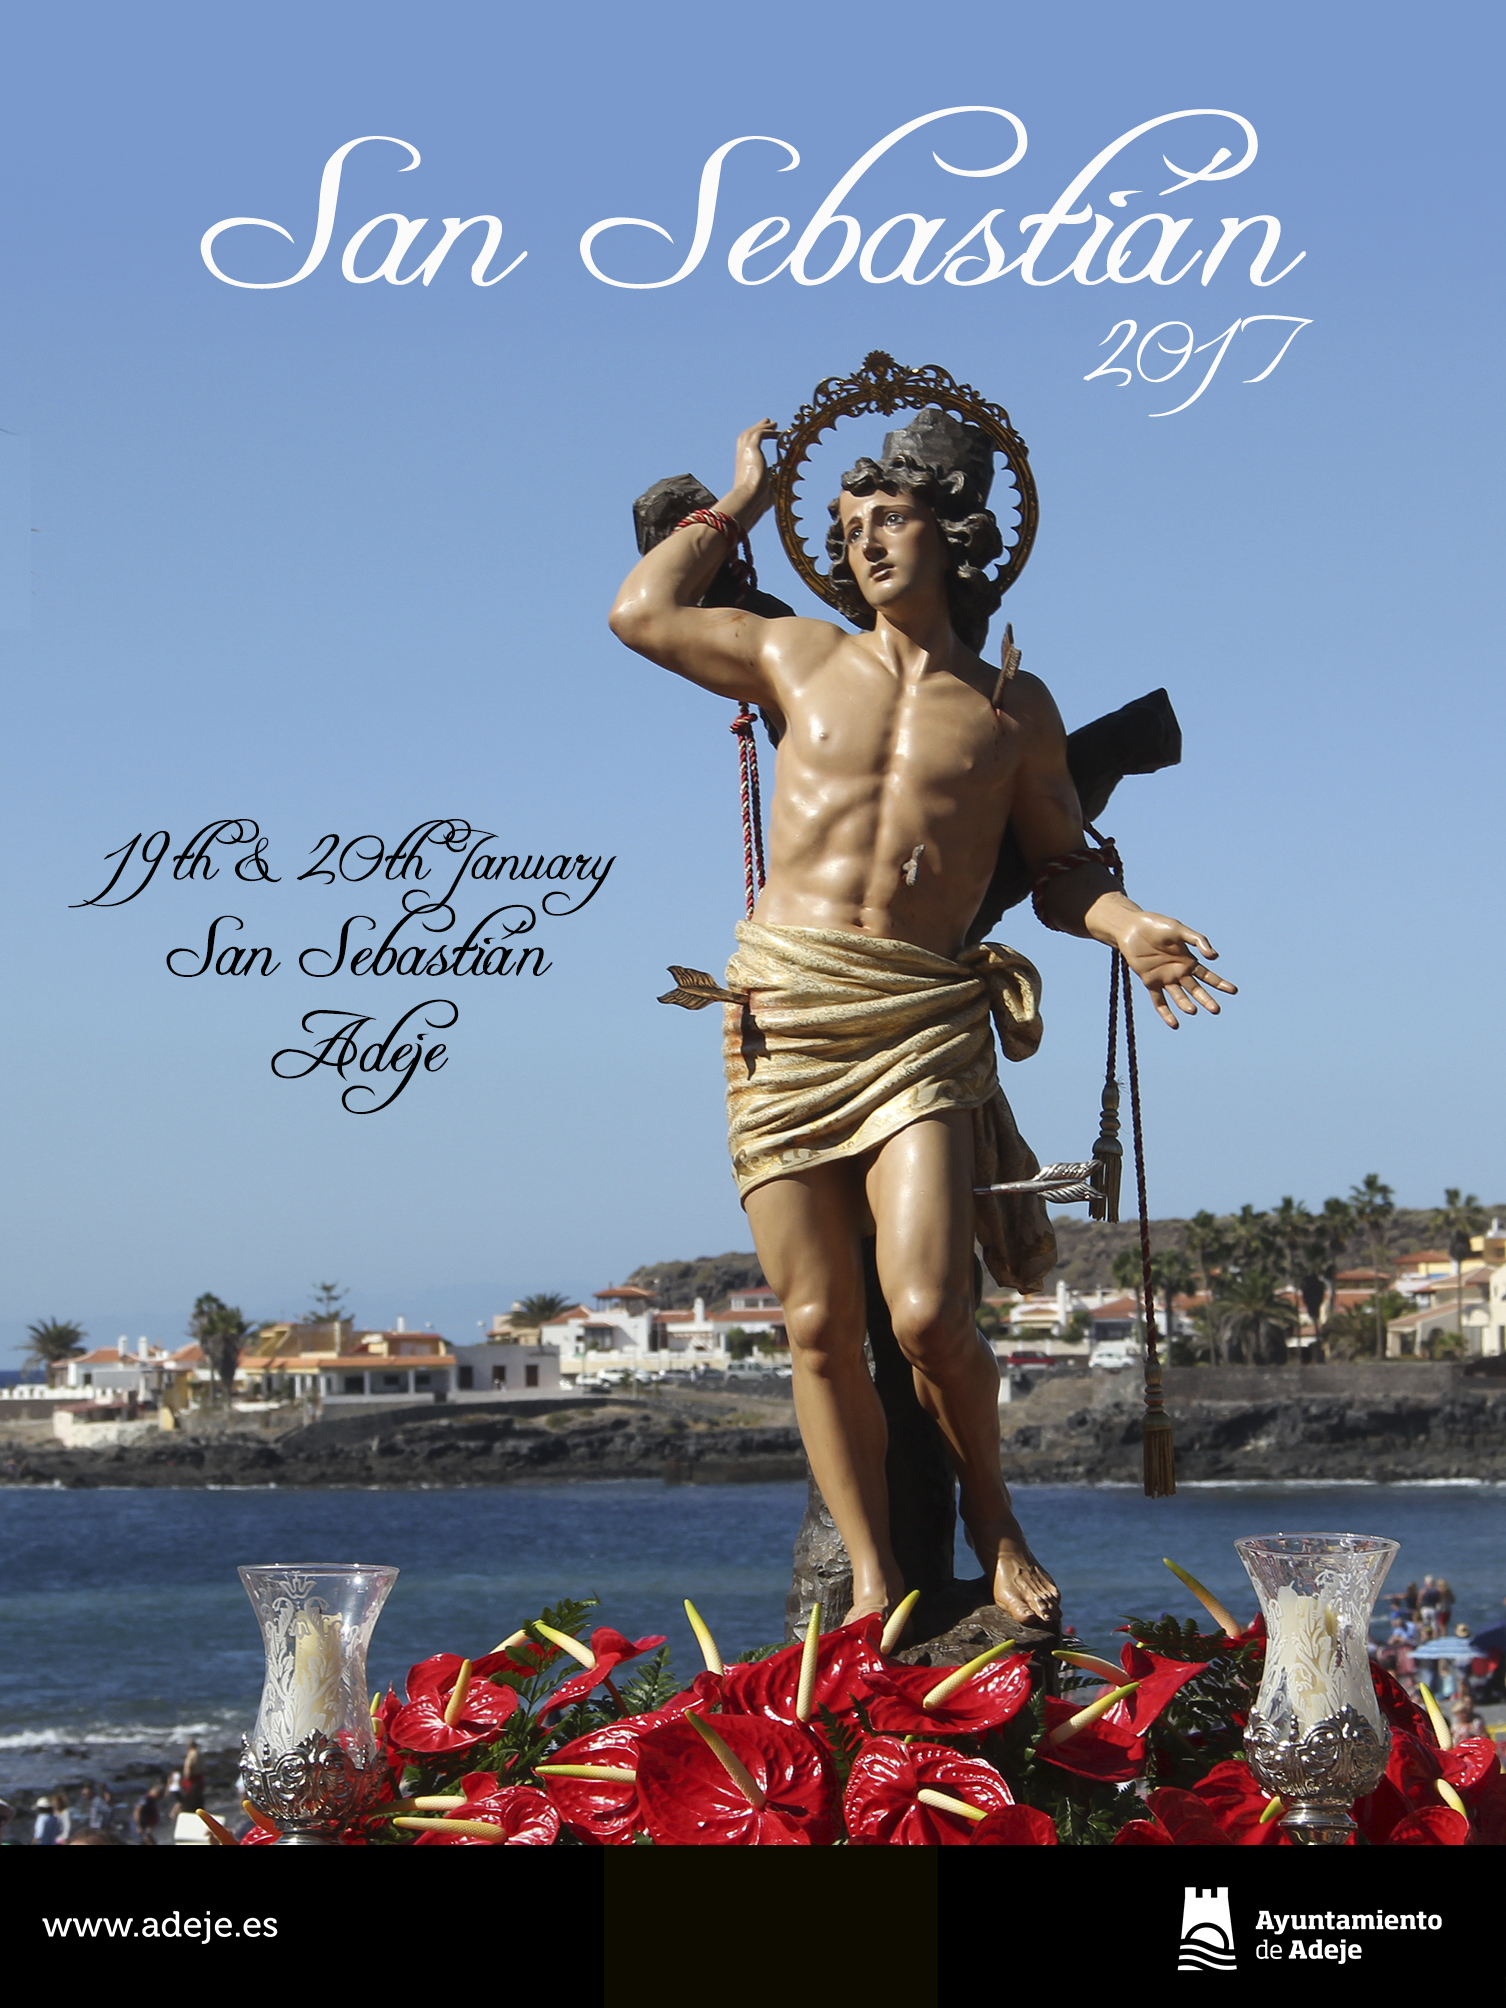 On January 20th 2017 Adeje celebrates San Sebastián, one of the oldest fiestas in Tenerife